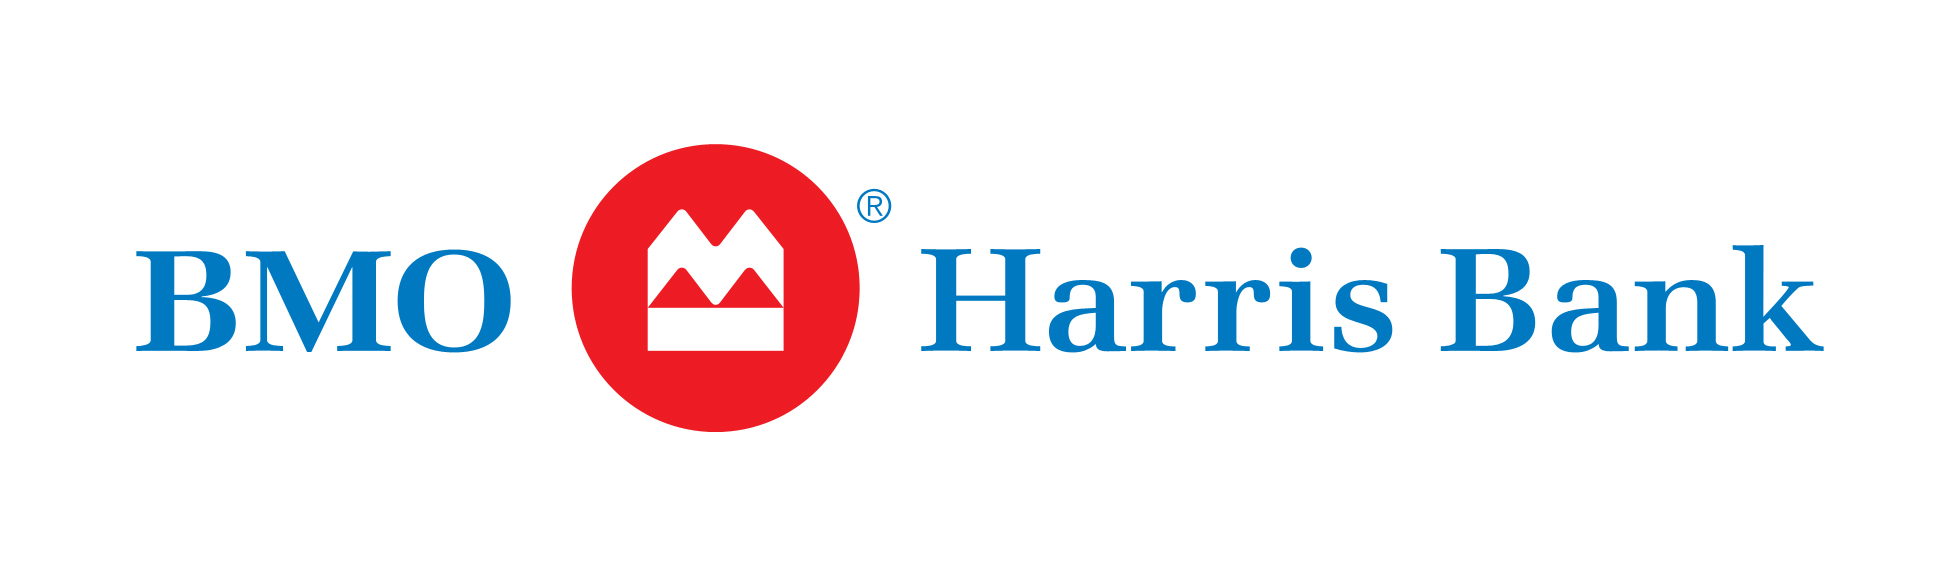 BMO Harris Bank - We're here to help.&trade;